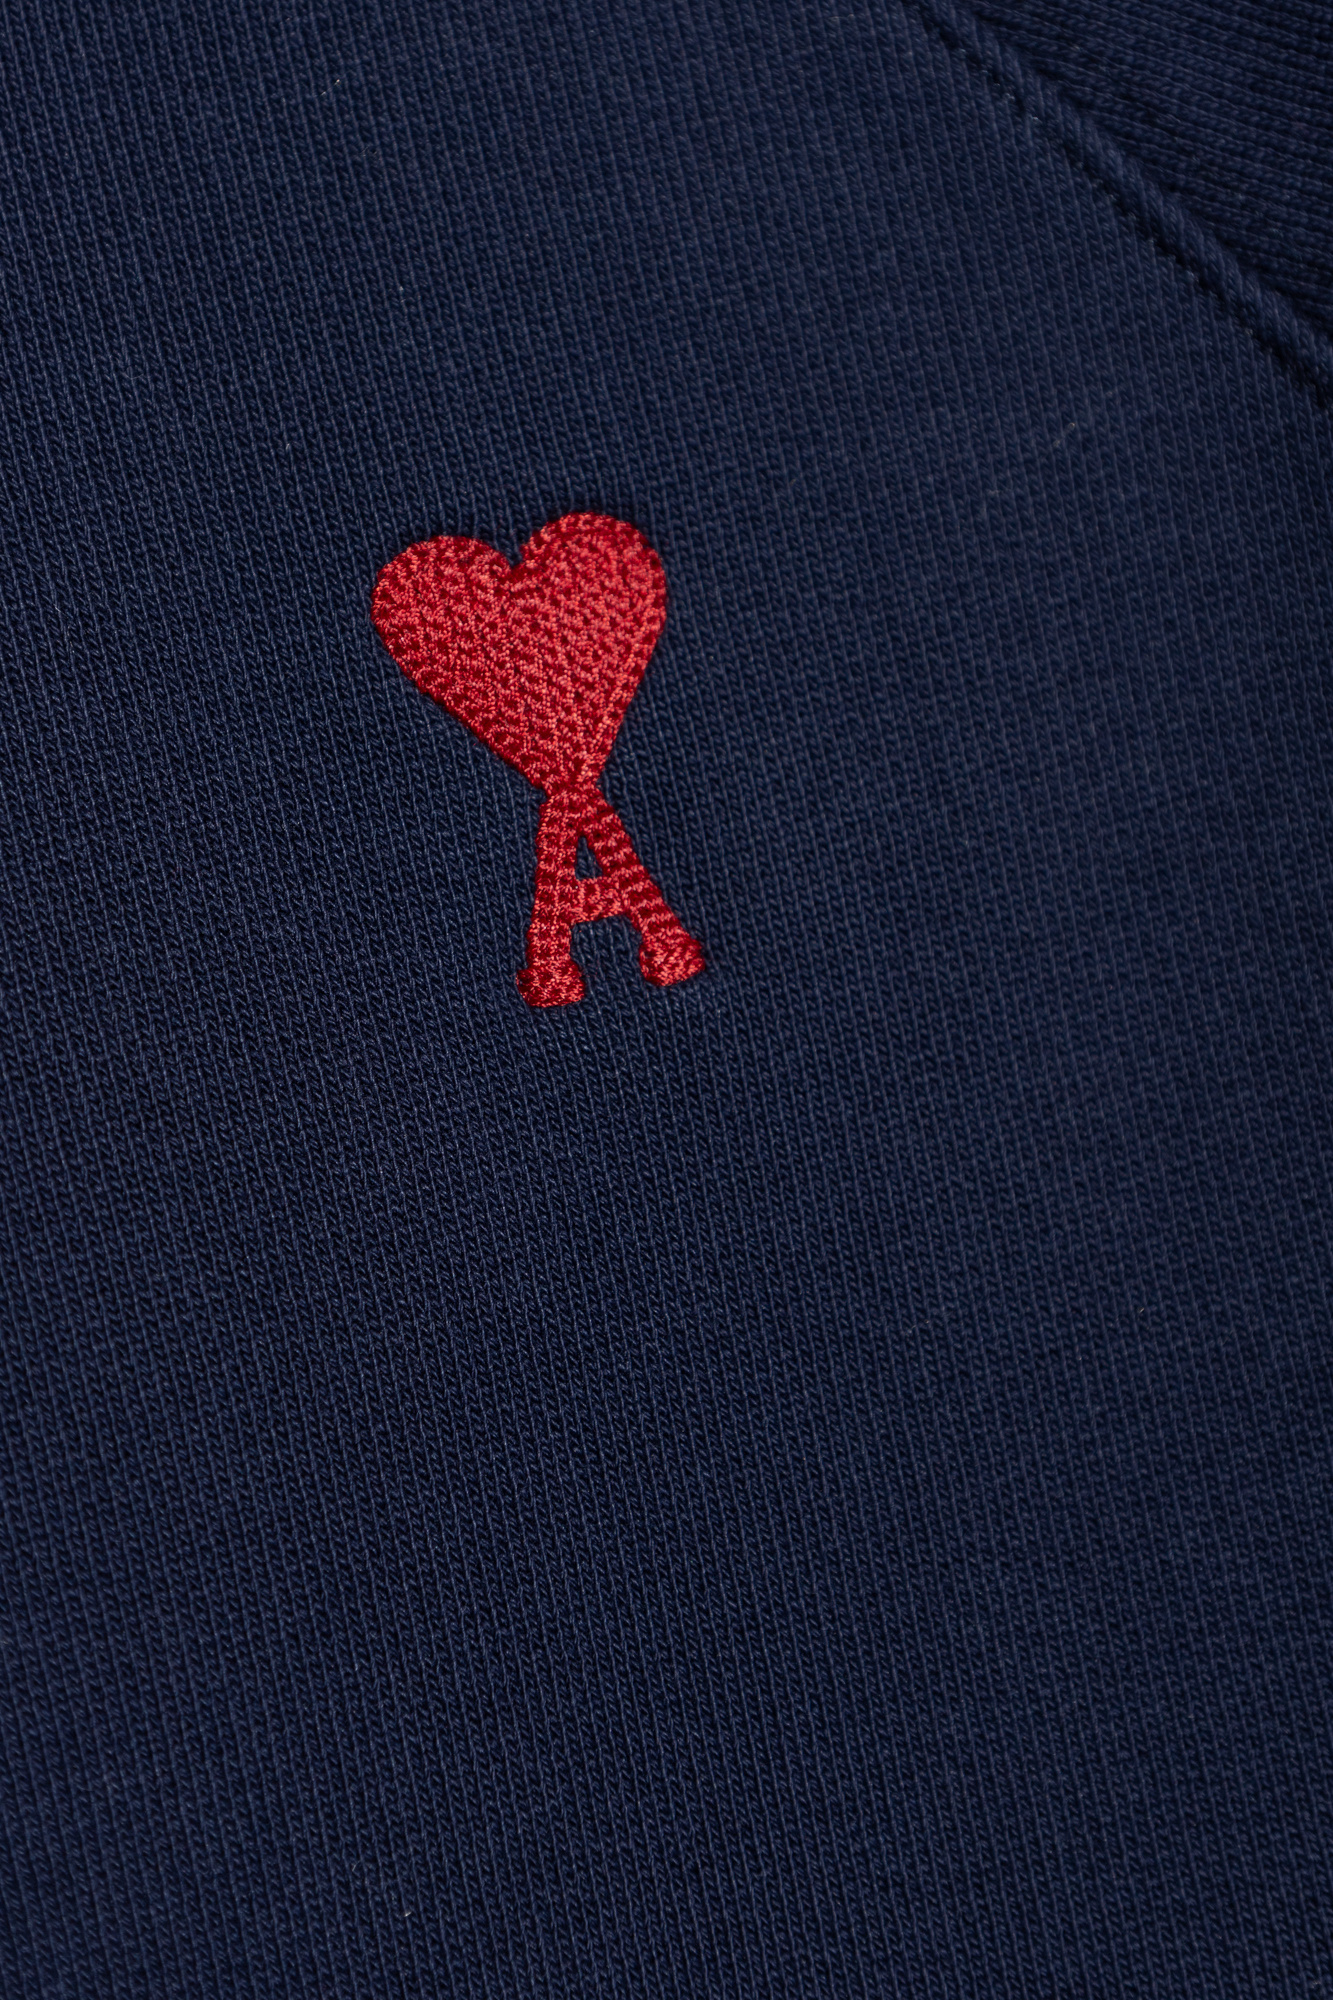 Ami Paris Logo Sweatshirt Navy